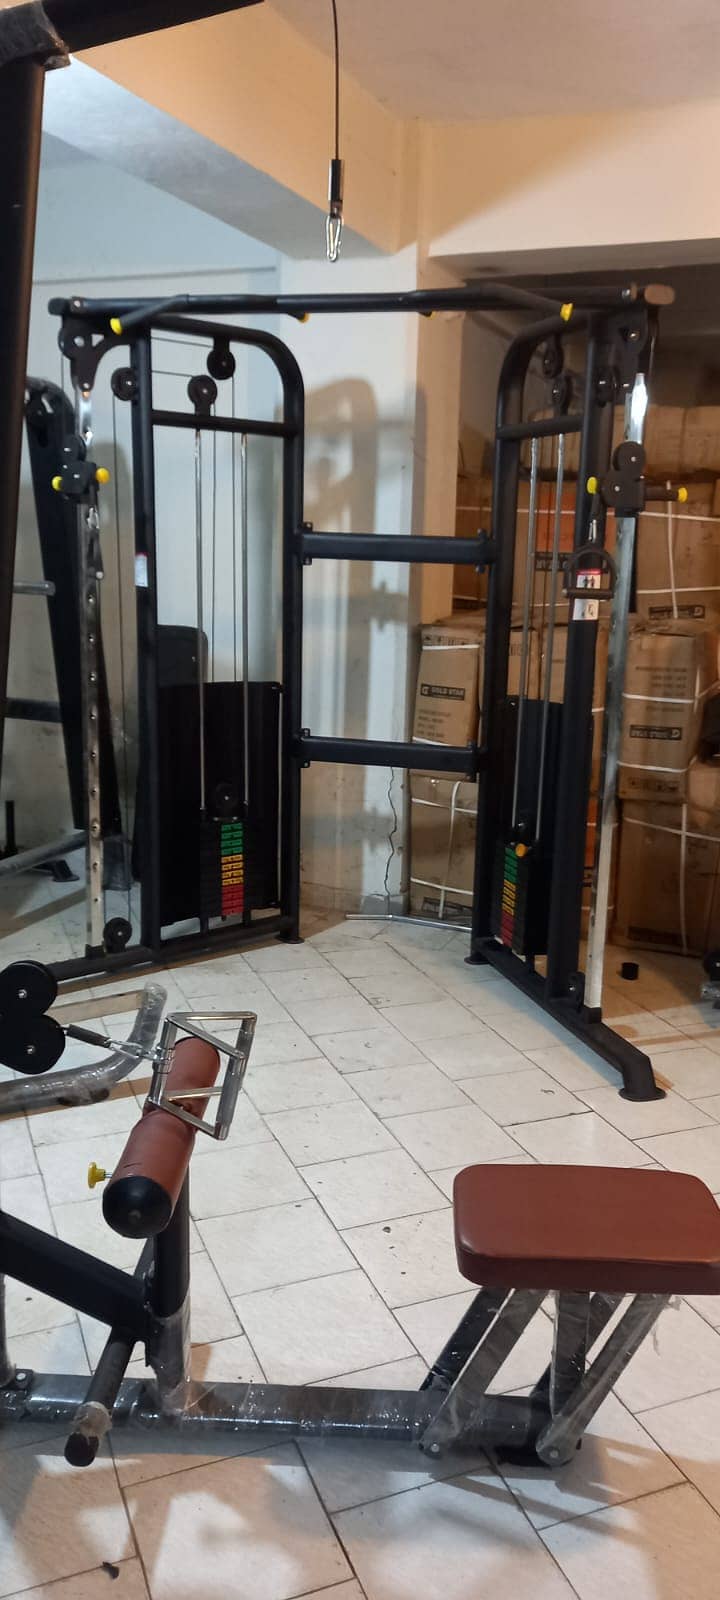 gym setup dumbel |commercial treadmill | elliptical | bench plate rods 4